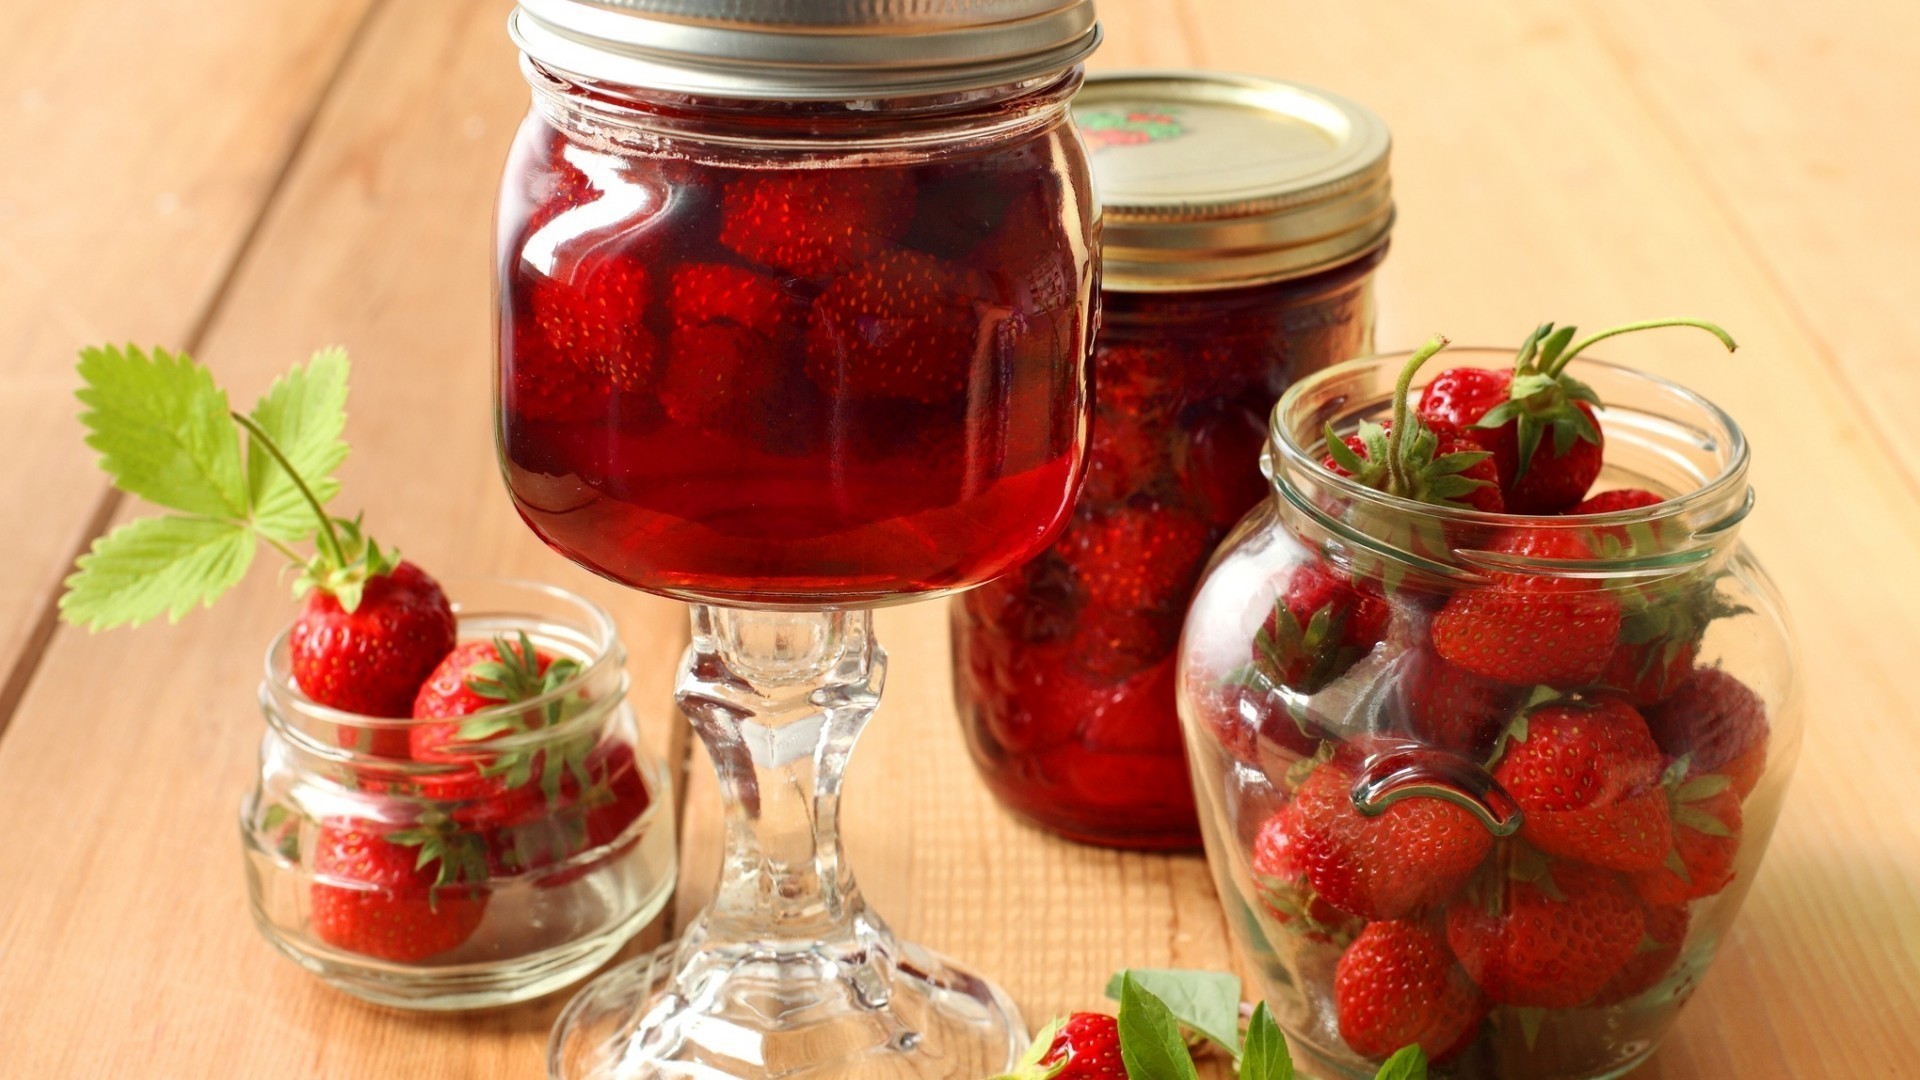 food & drink jam berry jar fruit strawberry glass marmalade food homemade sweet preserve grow leaf delicious gelatin juicy